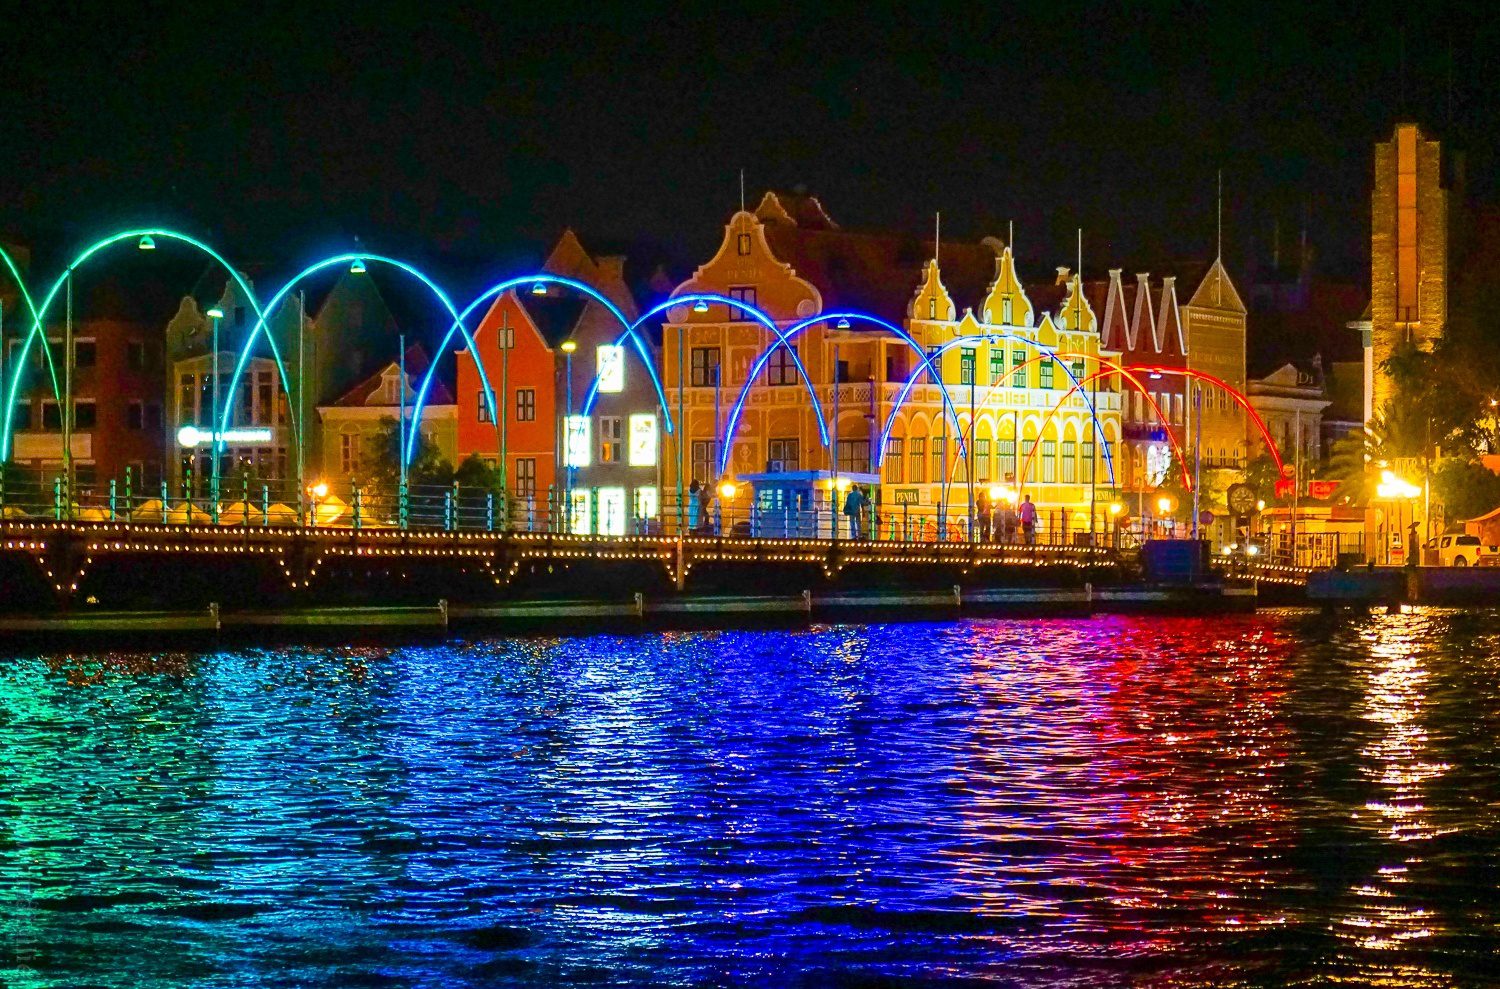 The Rainbow Bridge at night.